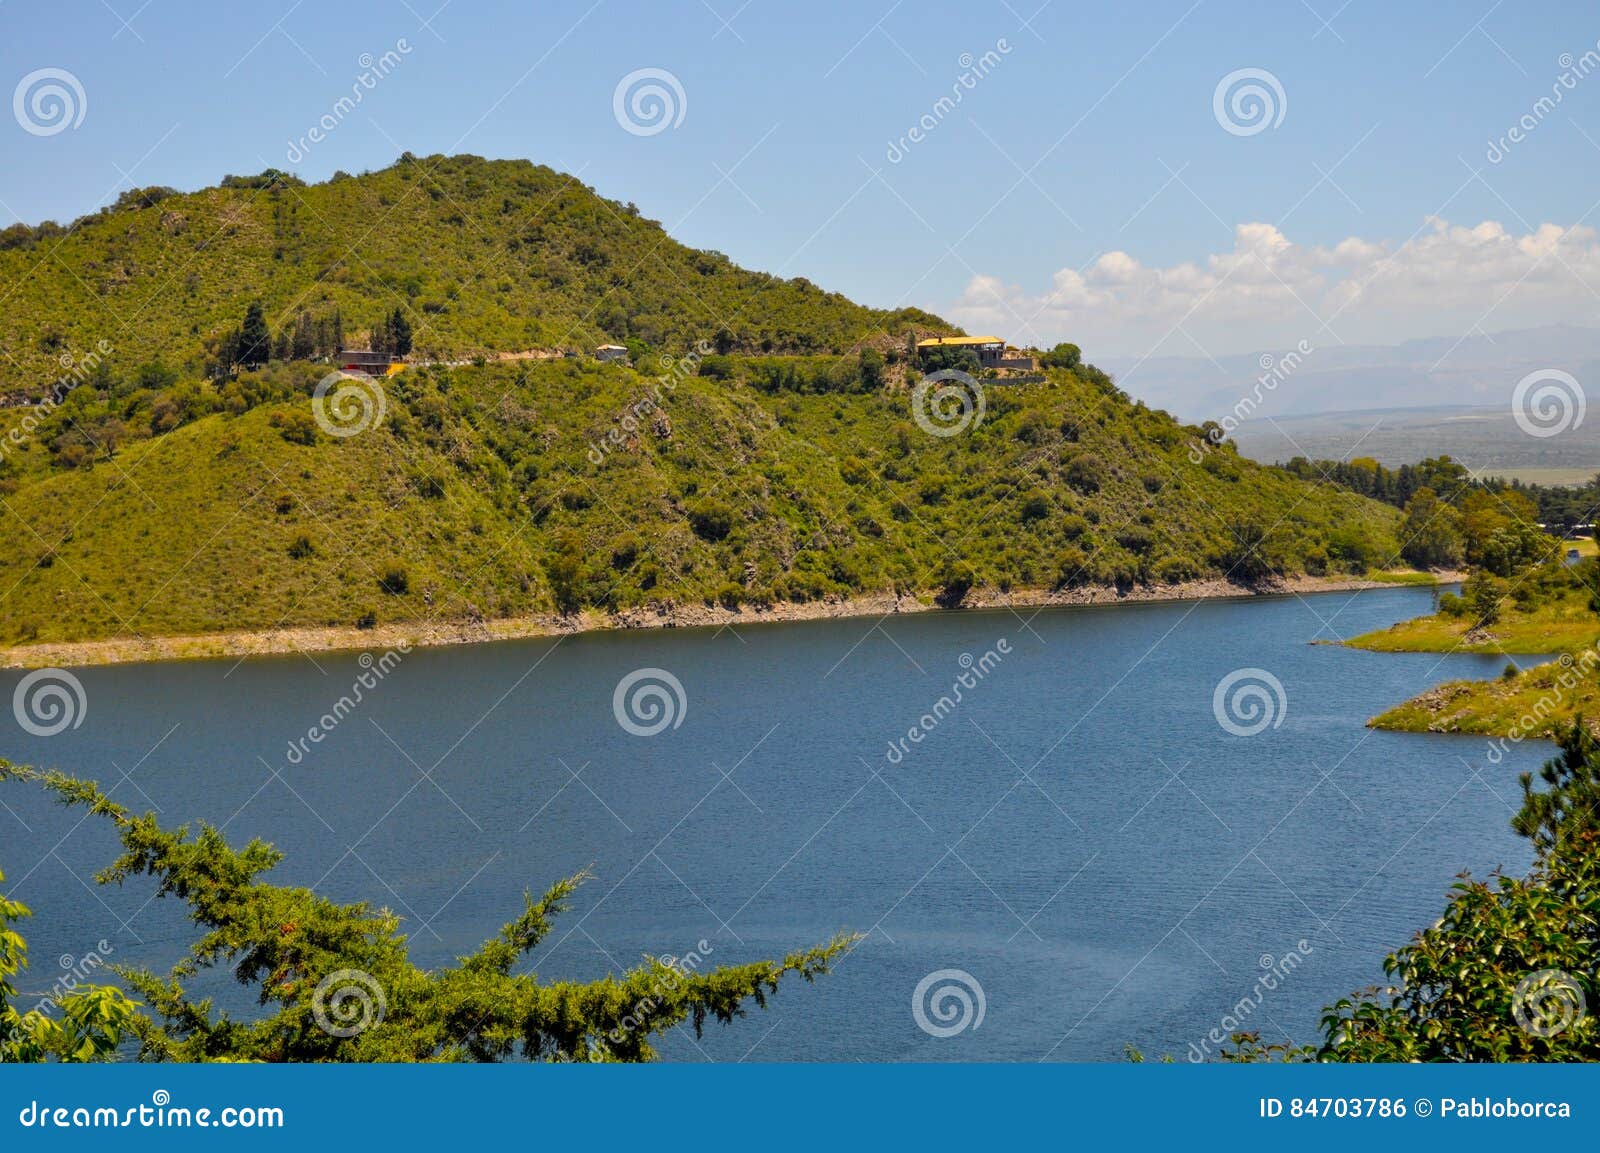 general view of the lake embalse dique los molinos in cordoba